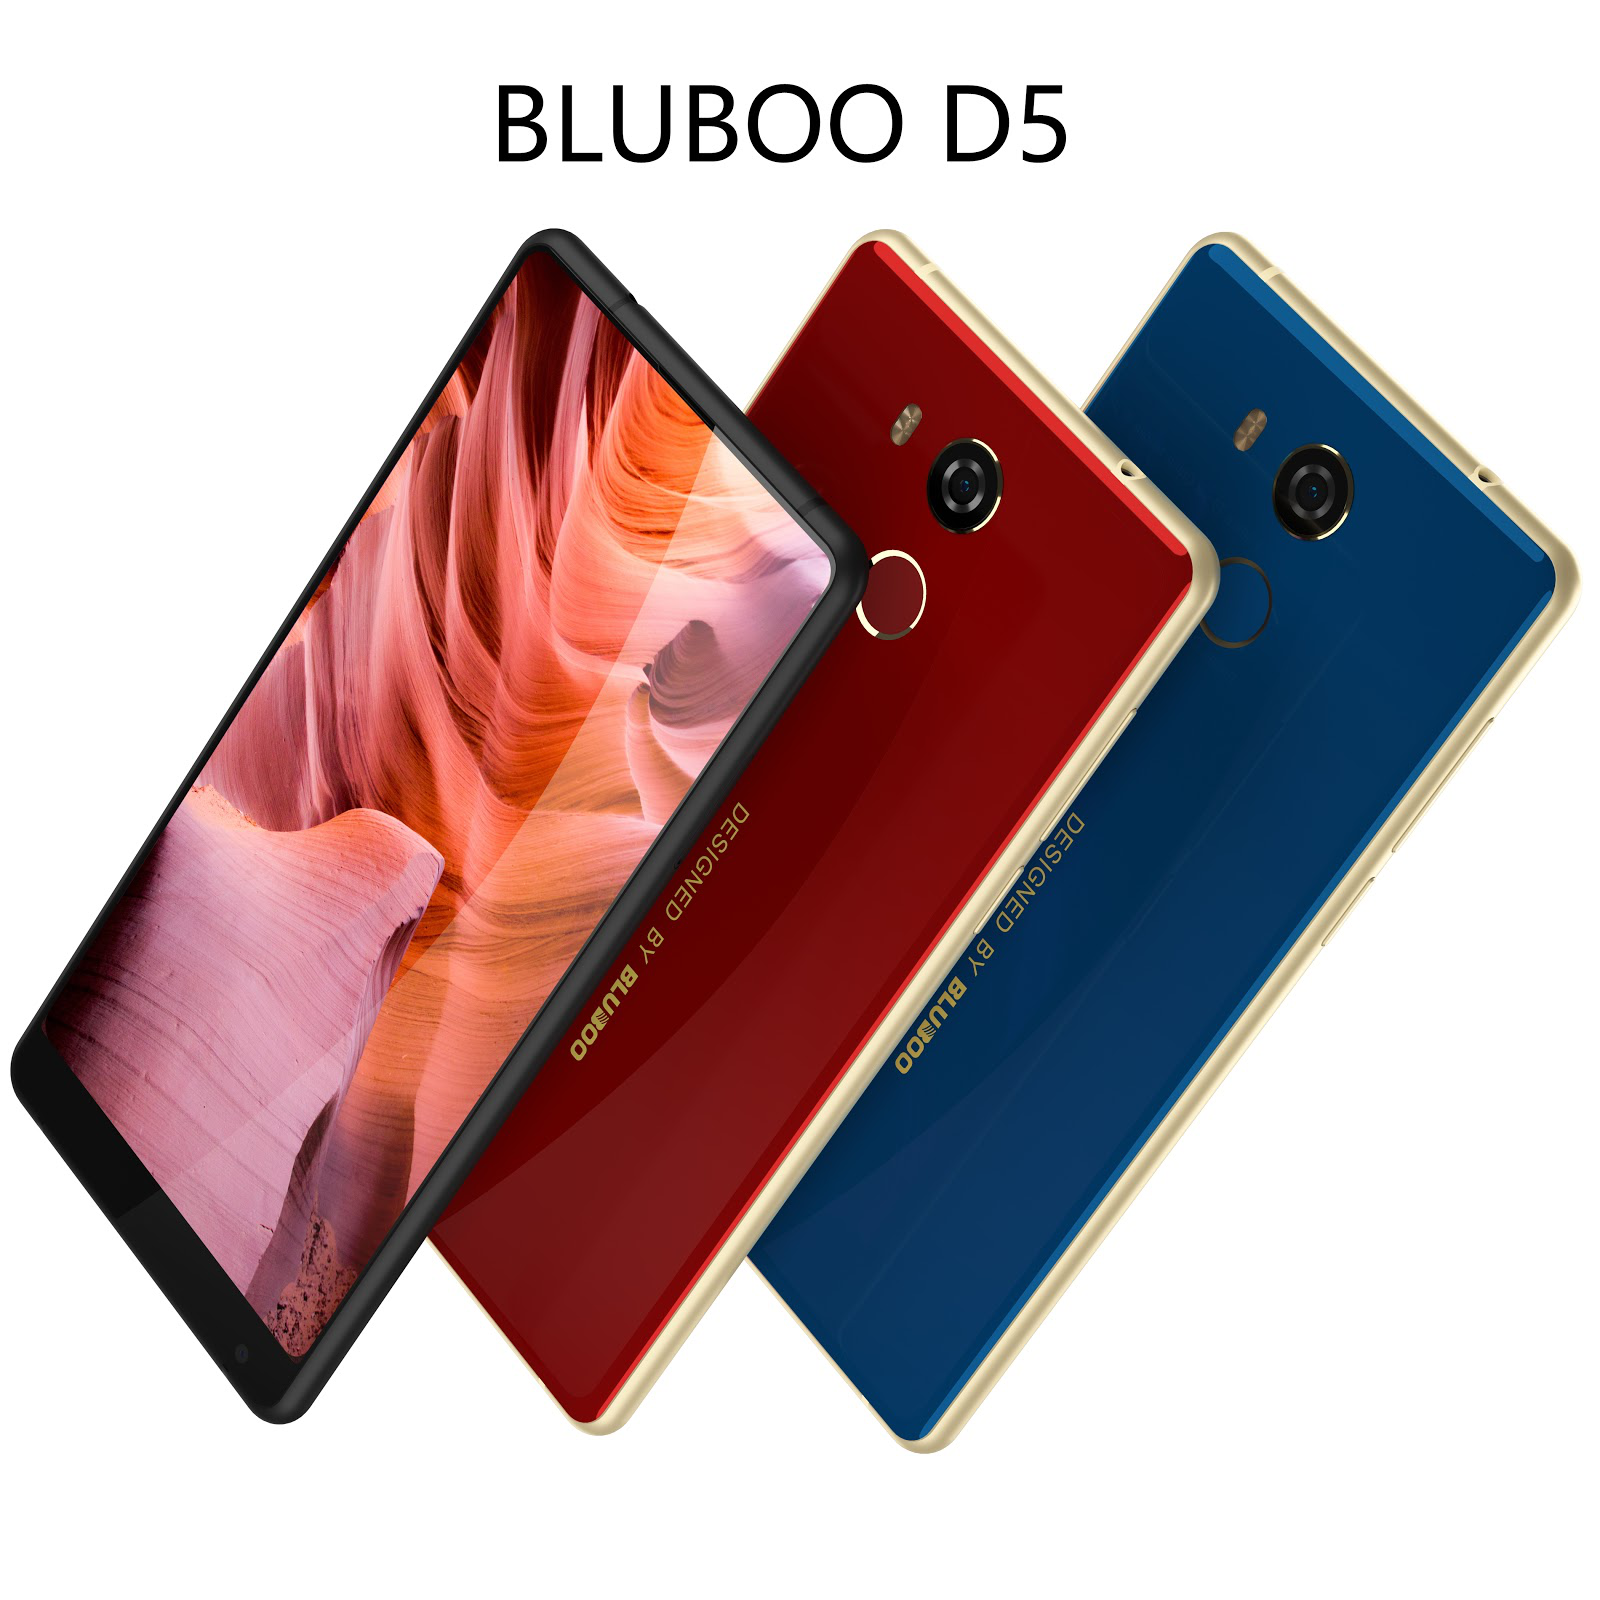 Дебютировавший смартфон Bluboo D5 получил корпус с цинкового сплава